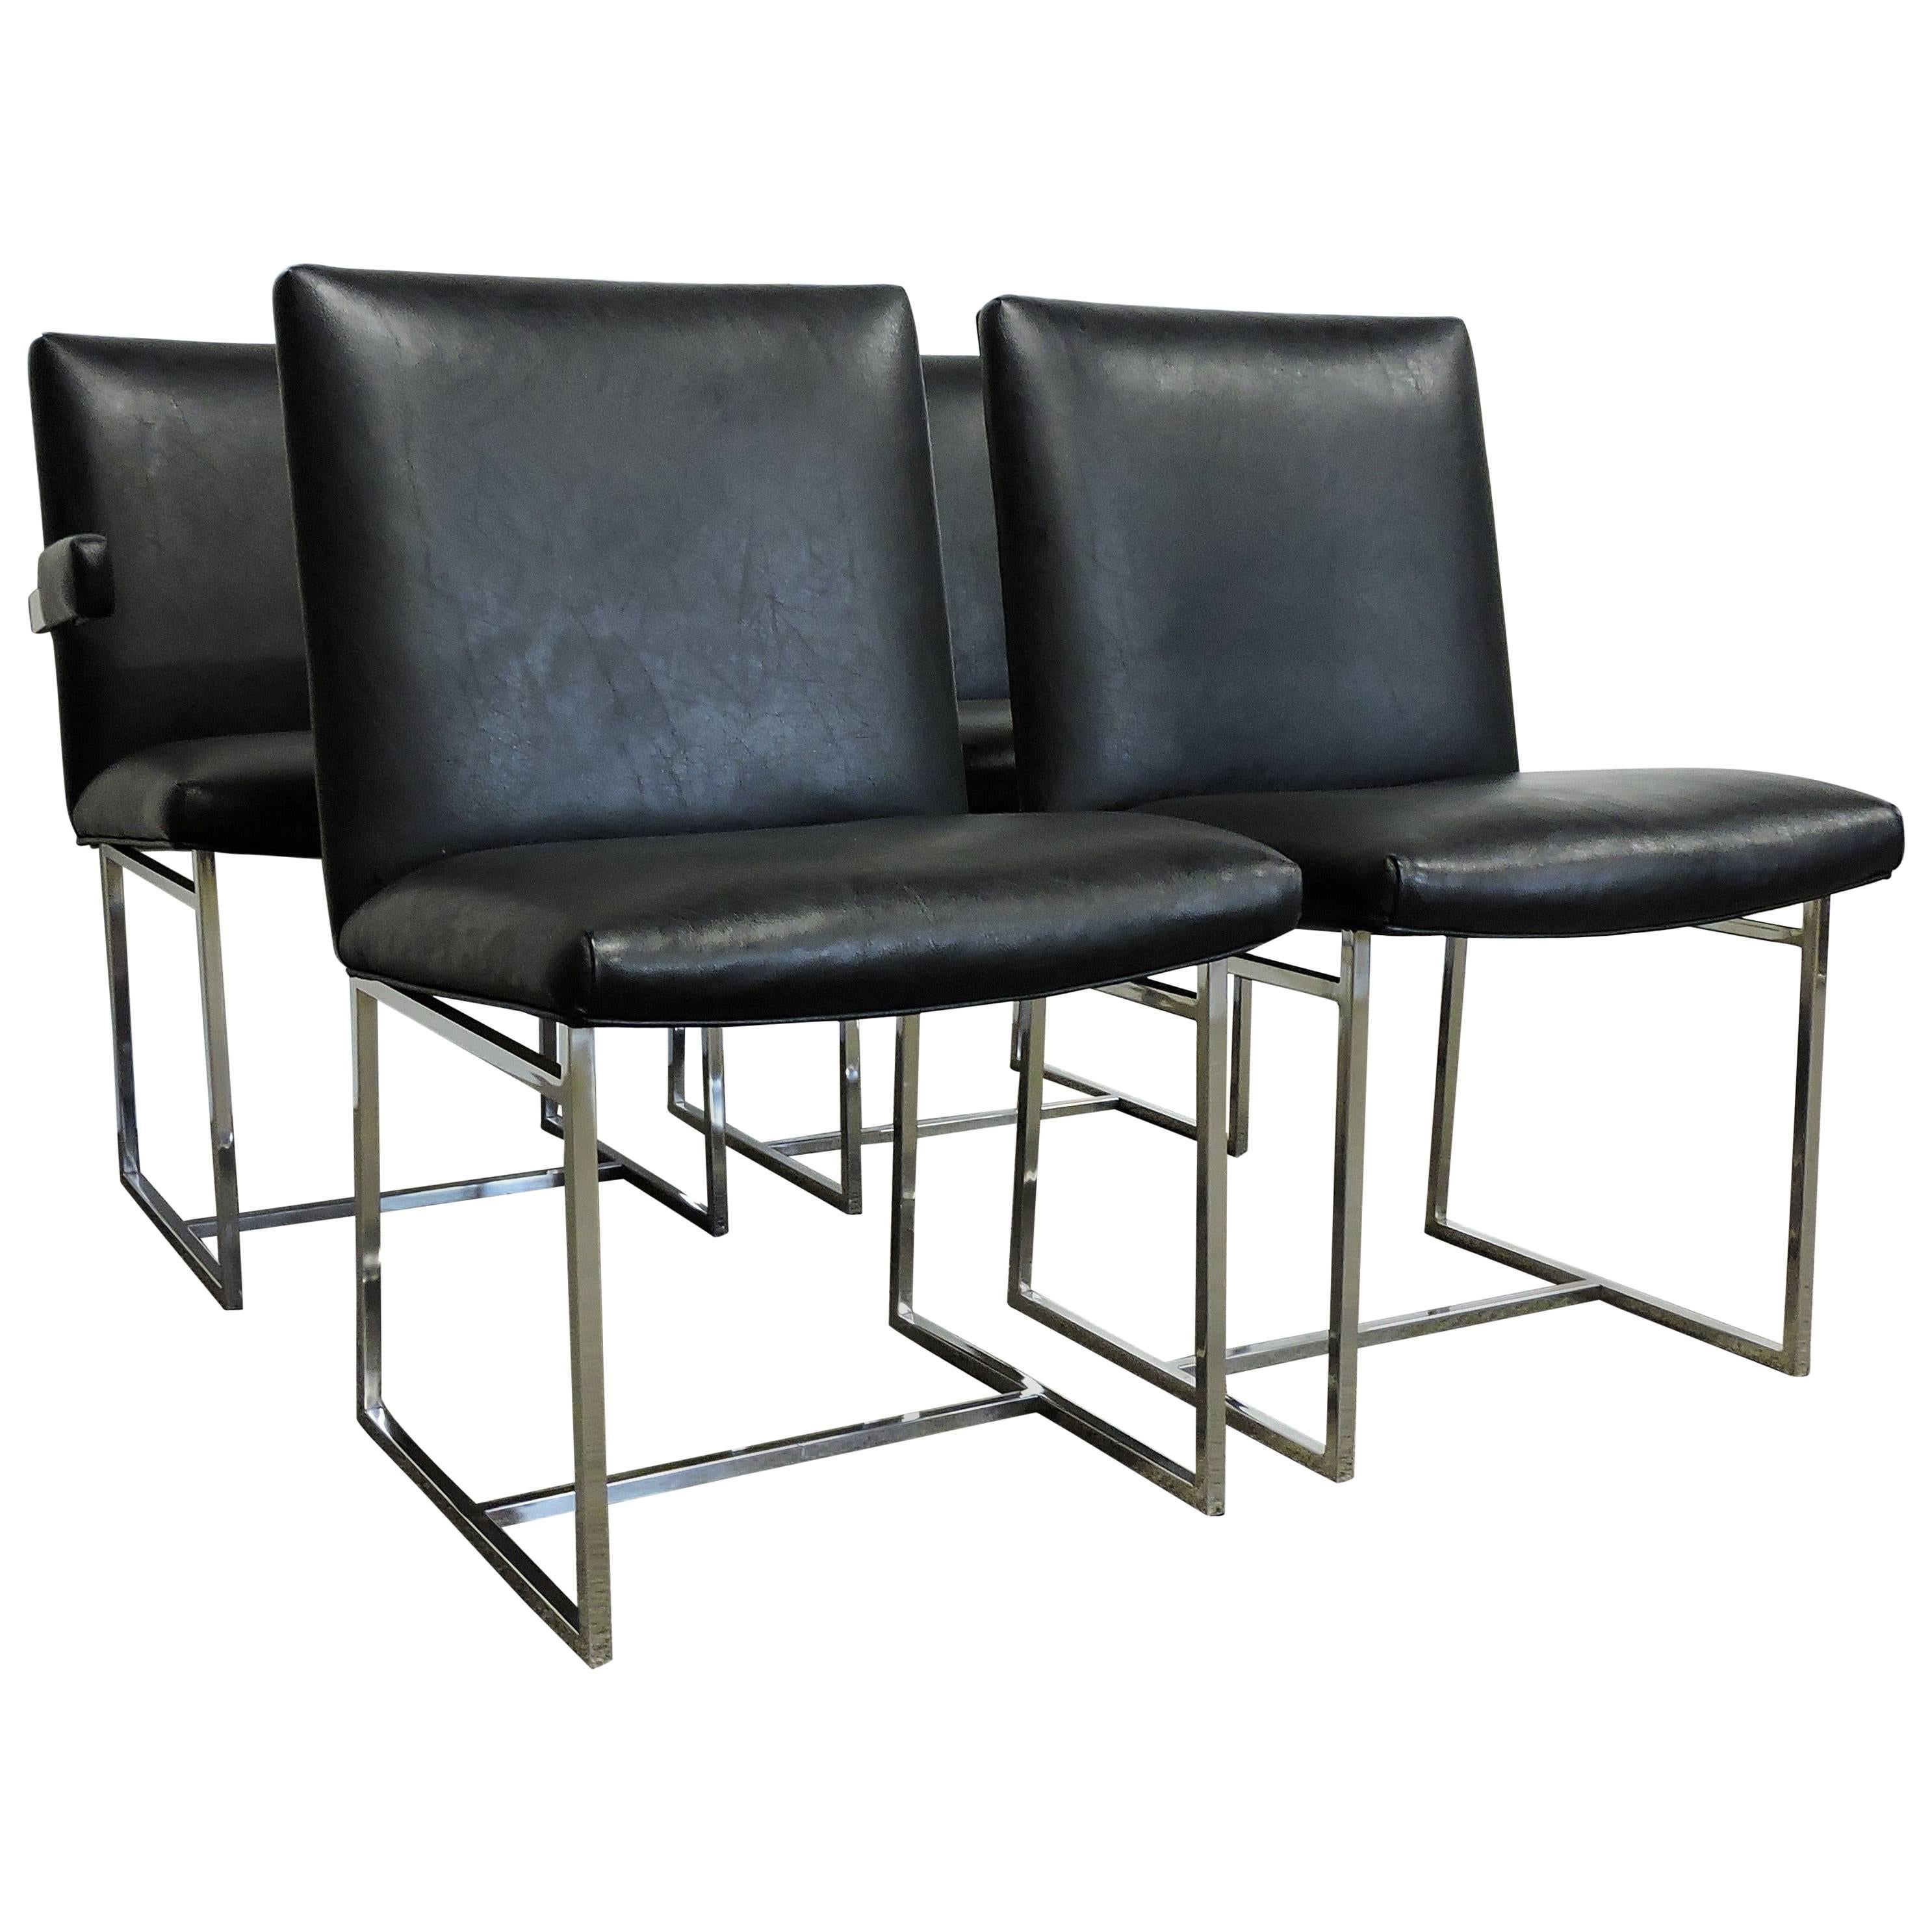 Four Milo Baughman Mid-Century Modern Chrome Dining Chairs